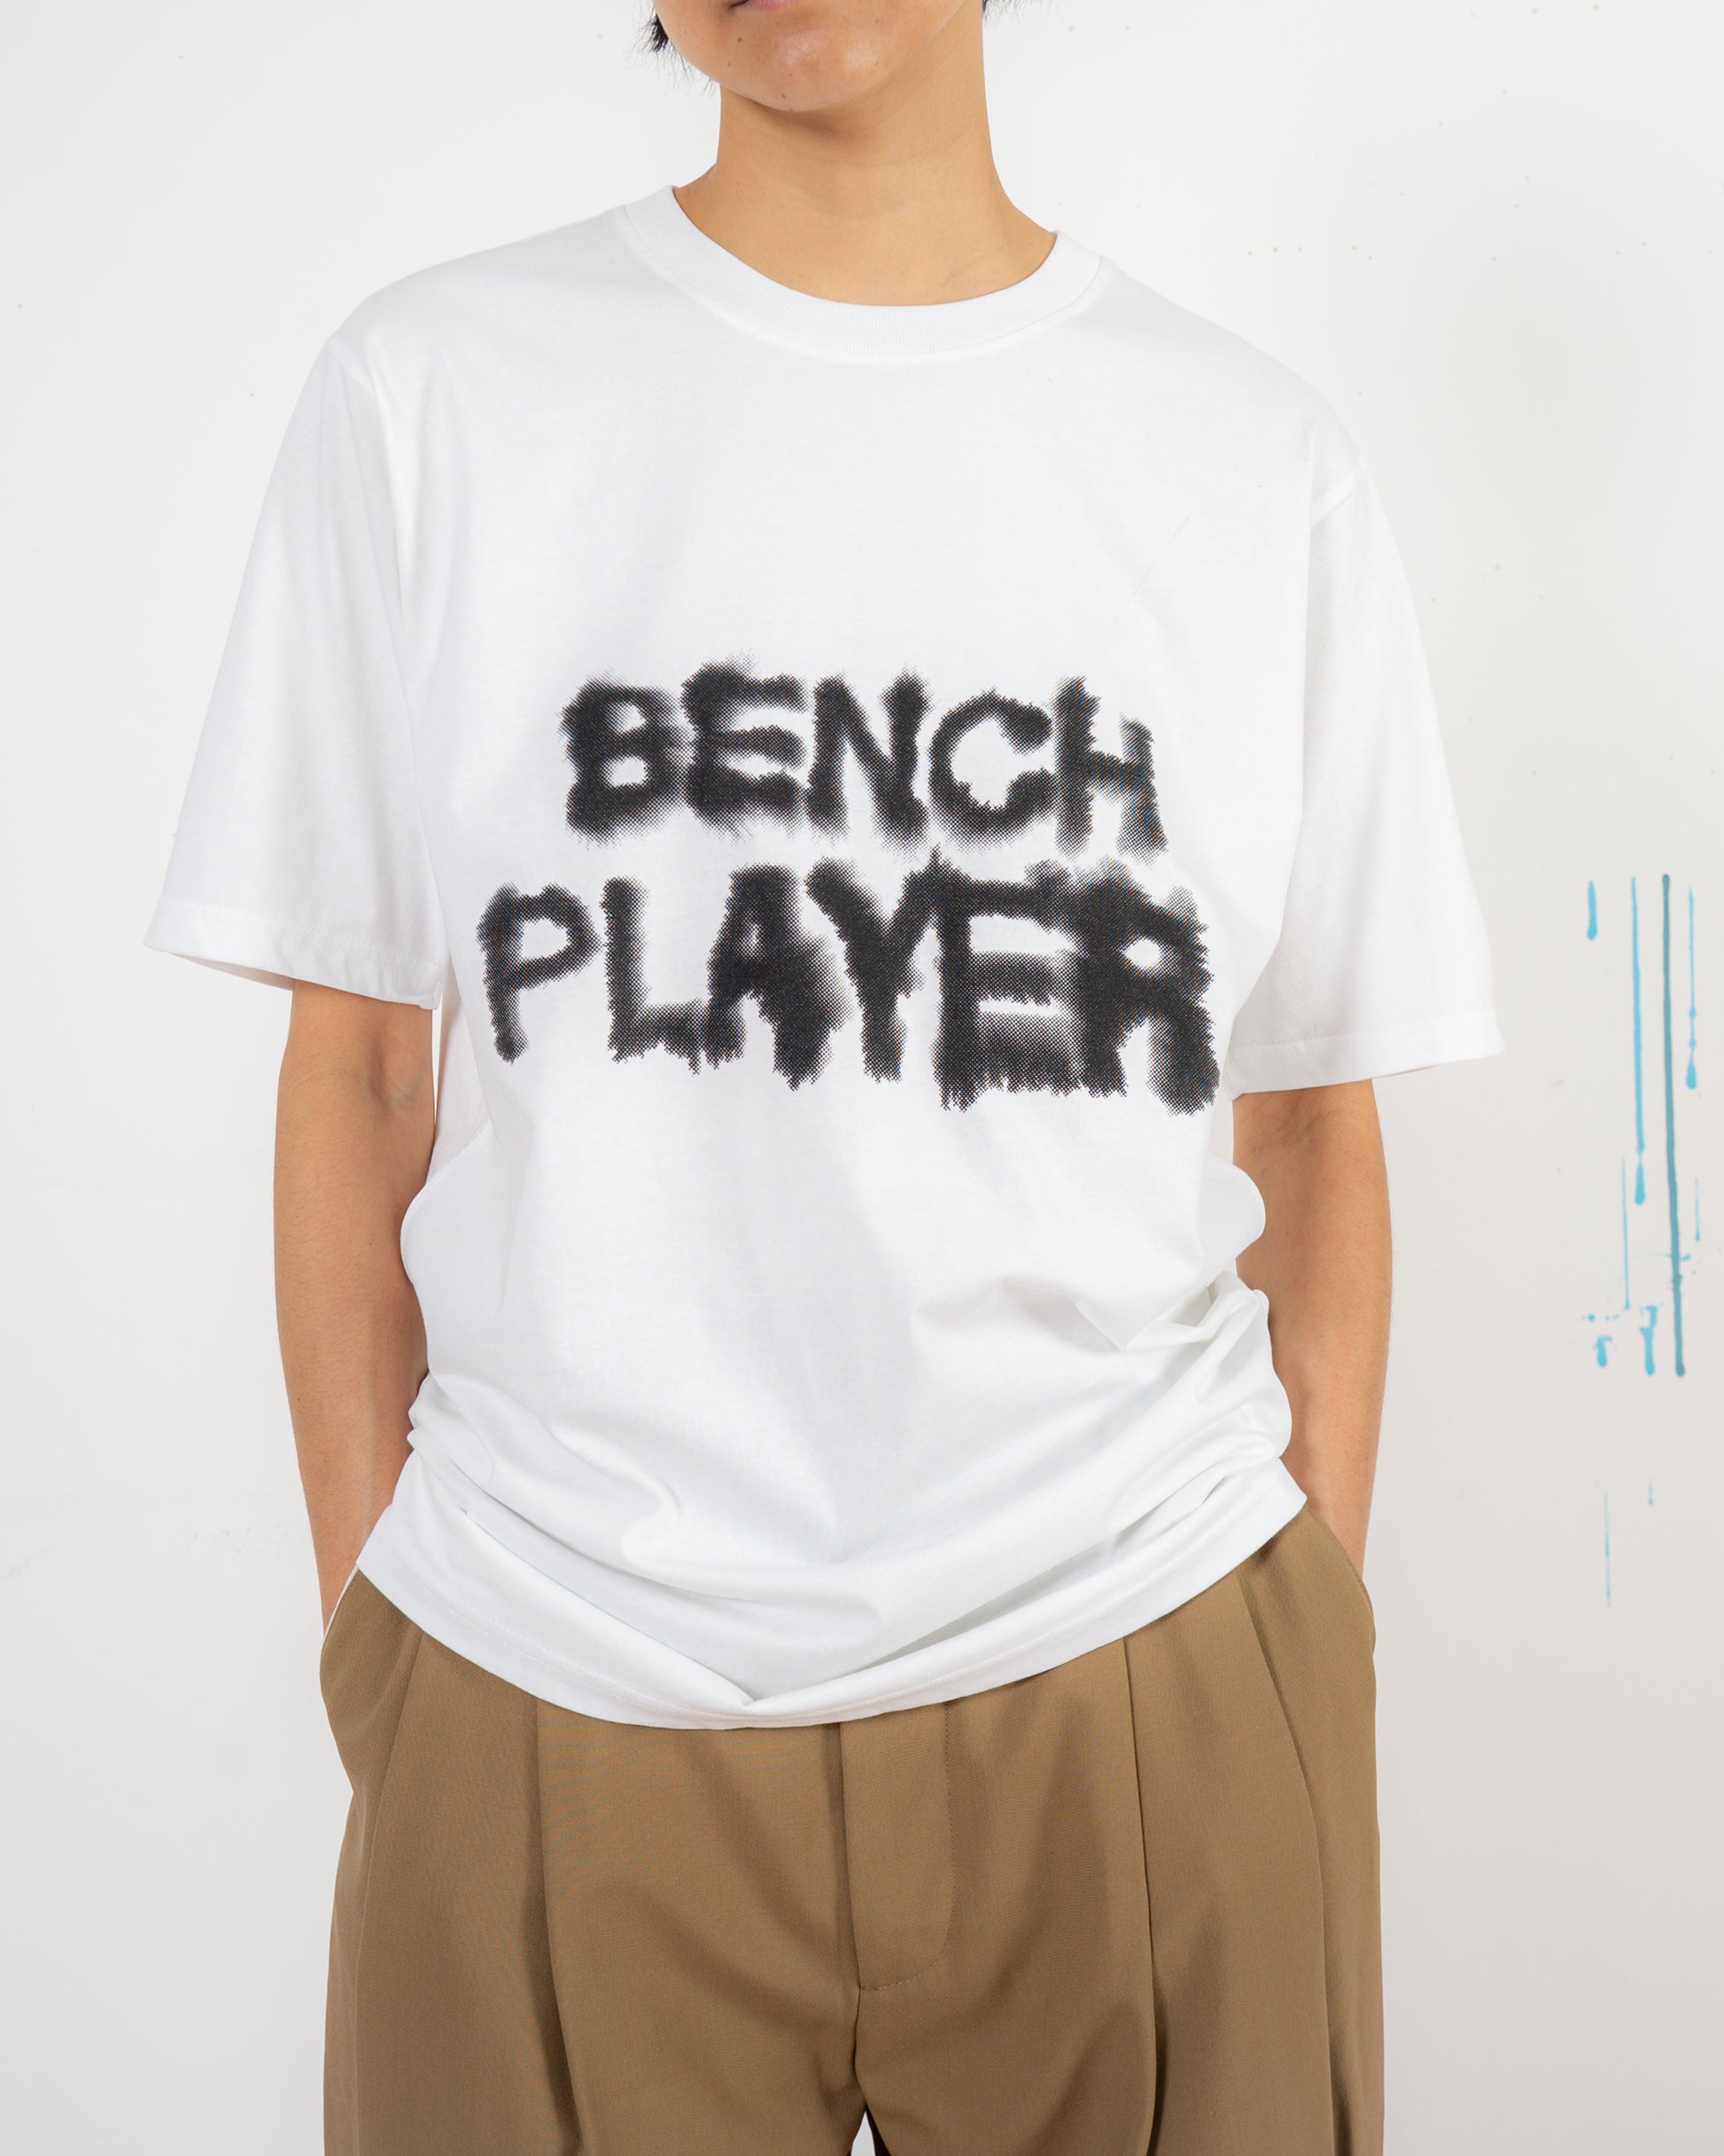 Helvetica Player Mierlo van – Rop Animals T-Shirt by Wild Bench